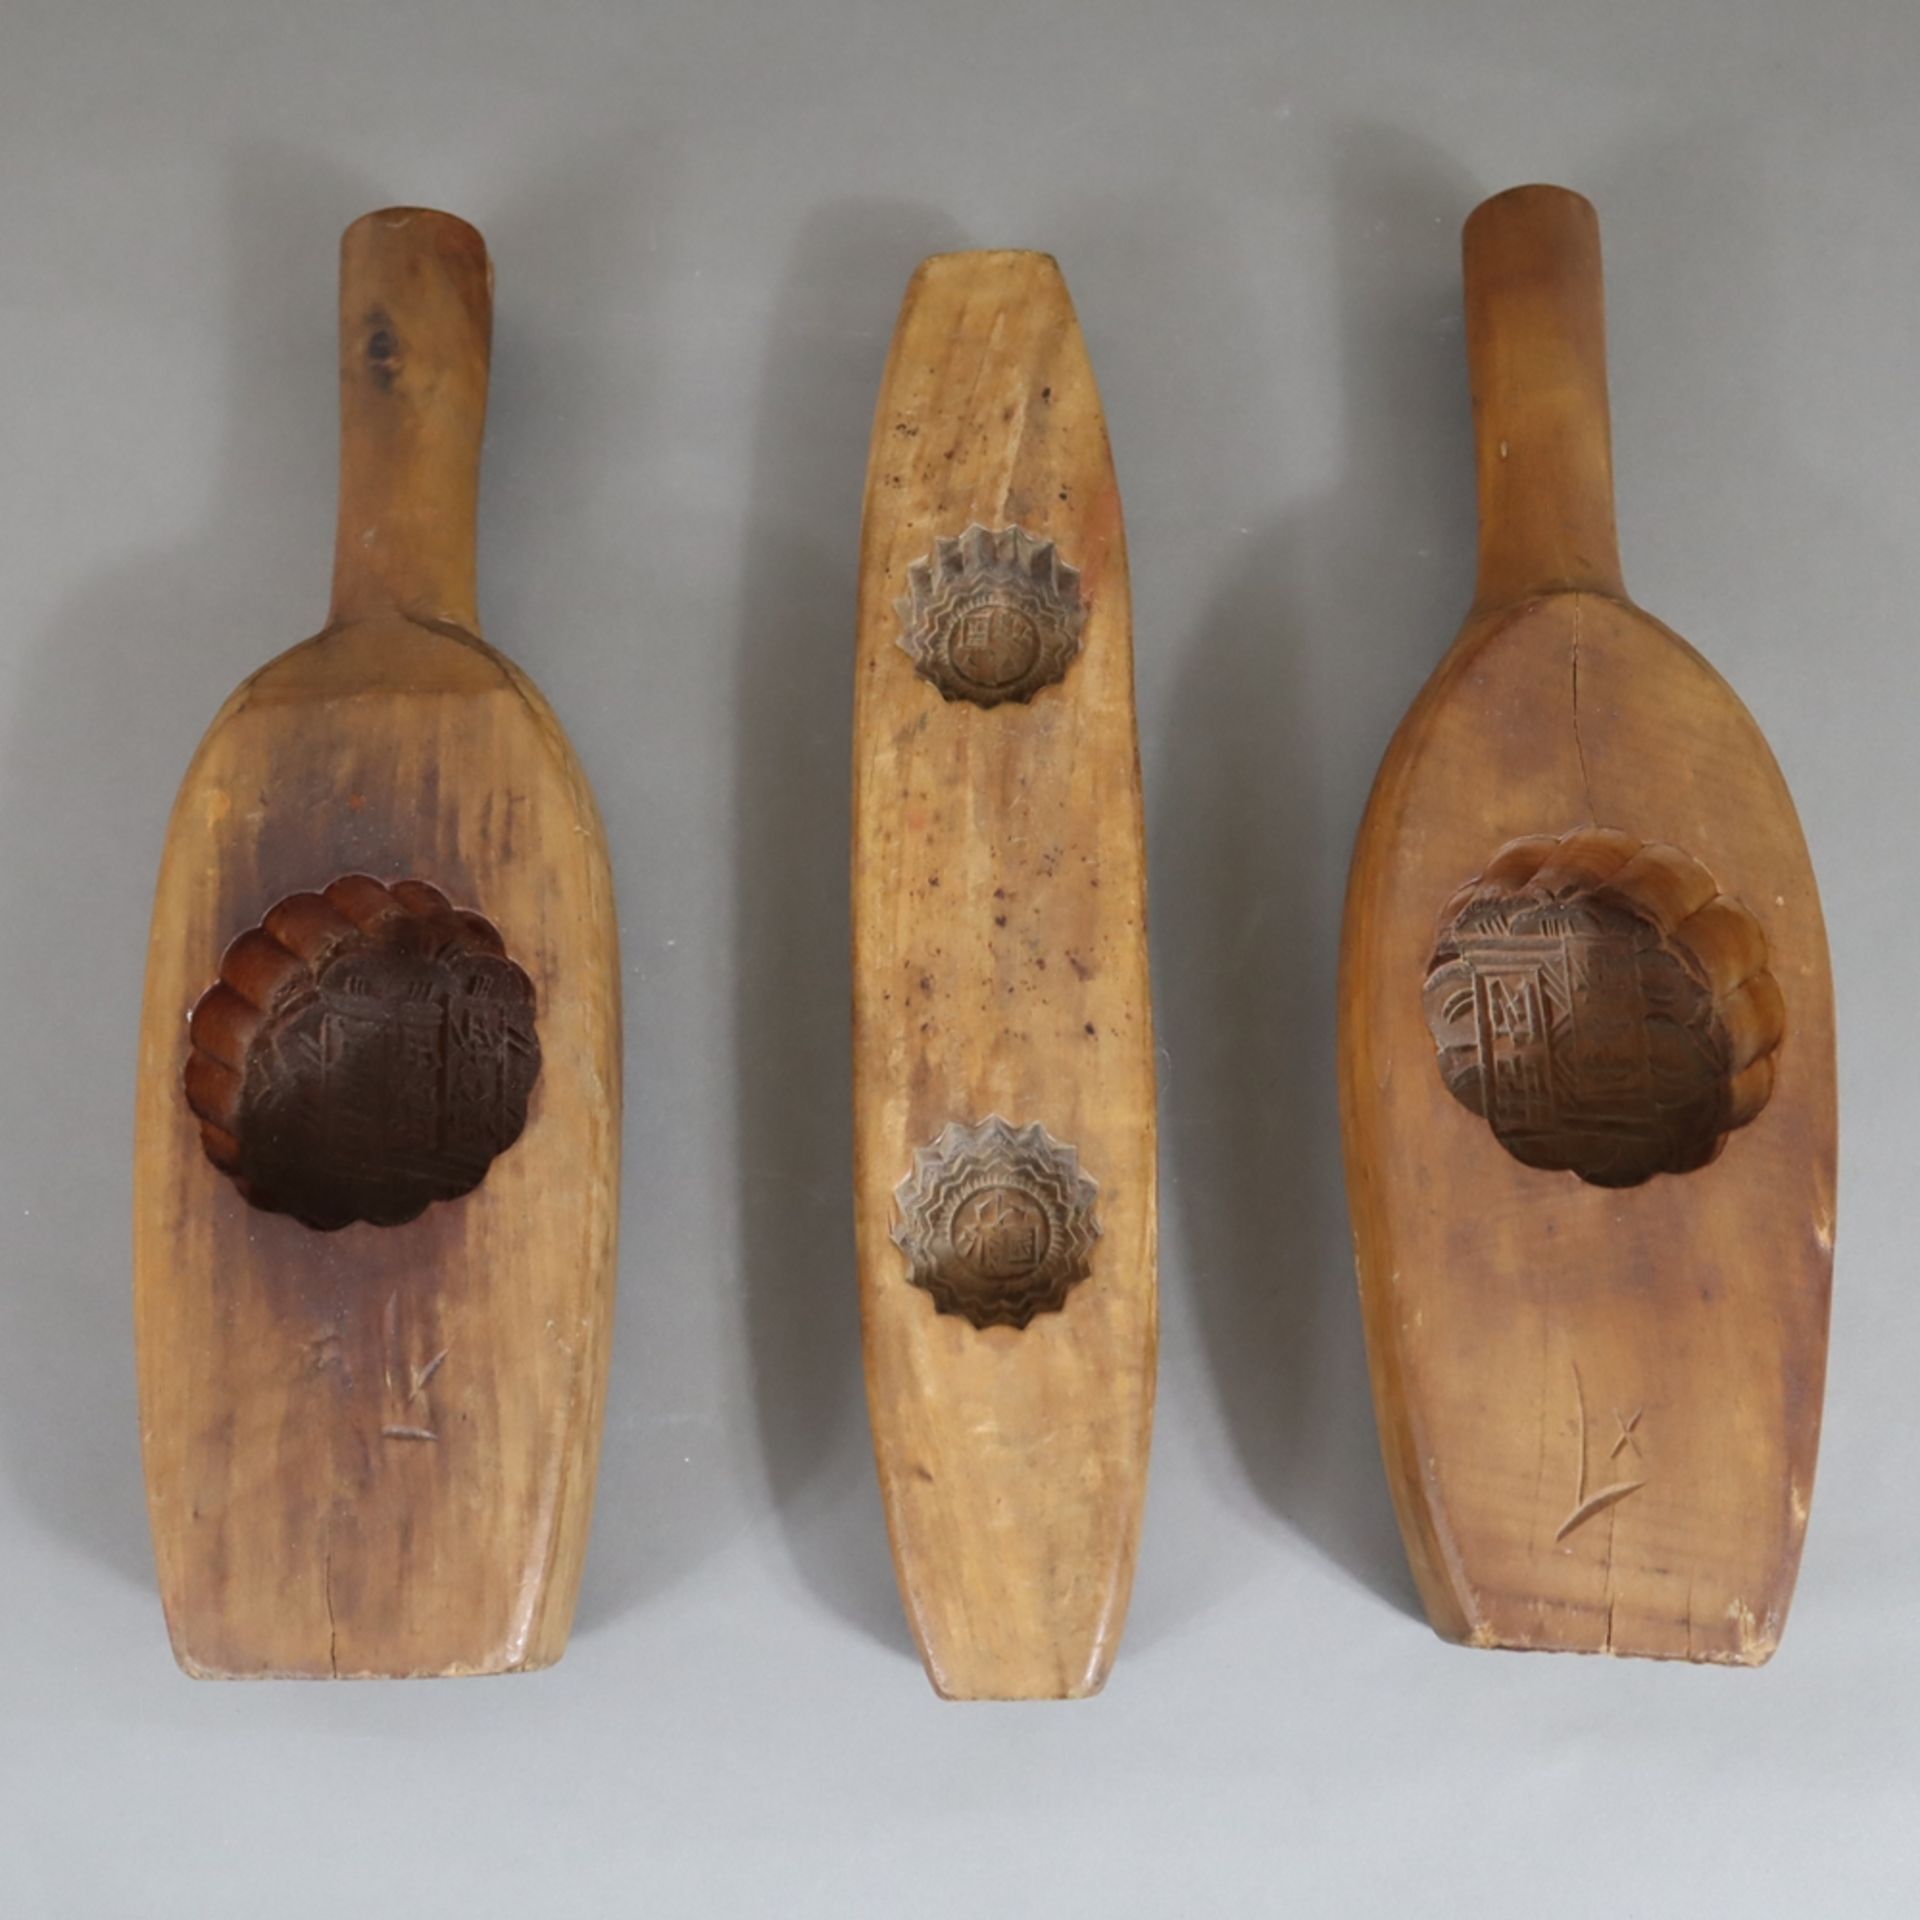 Drei Reiskuchen Formen - China, wohl Guangdong-Provinz, Anfang 20. Jh., Holz, 2x geschnitzt mit jew